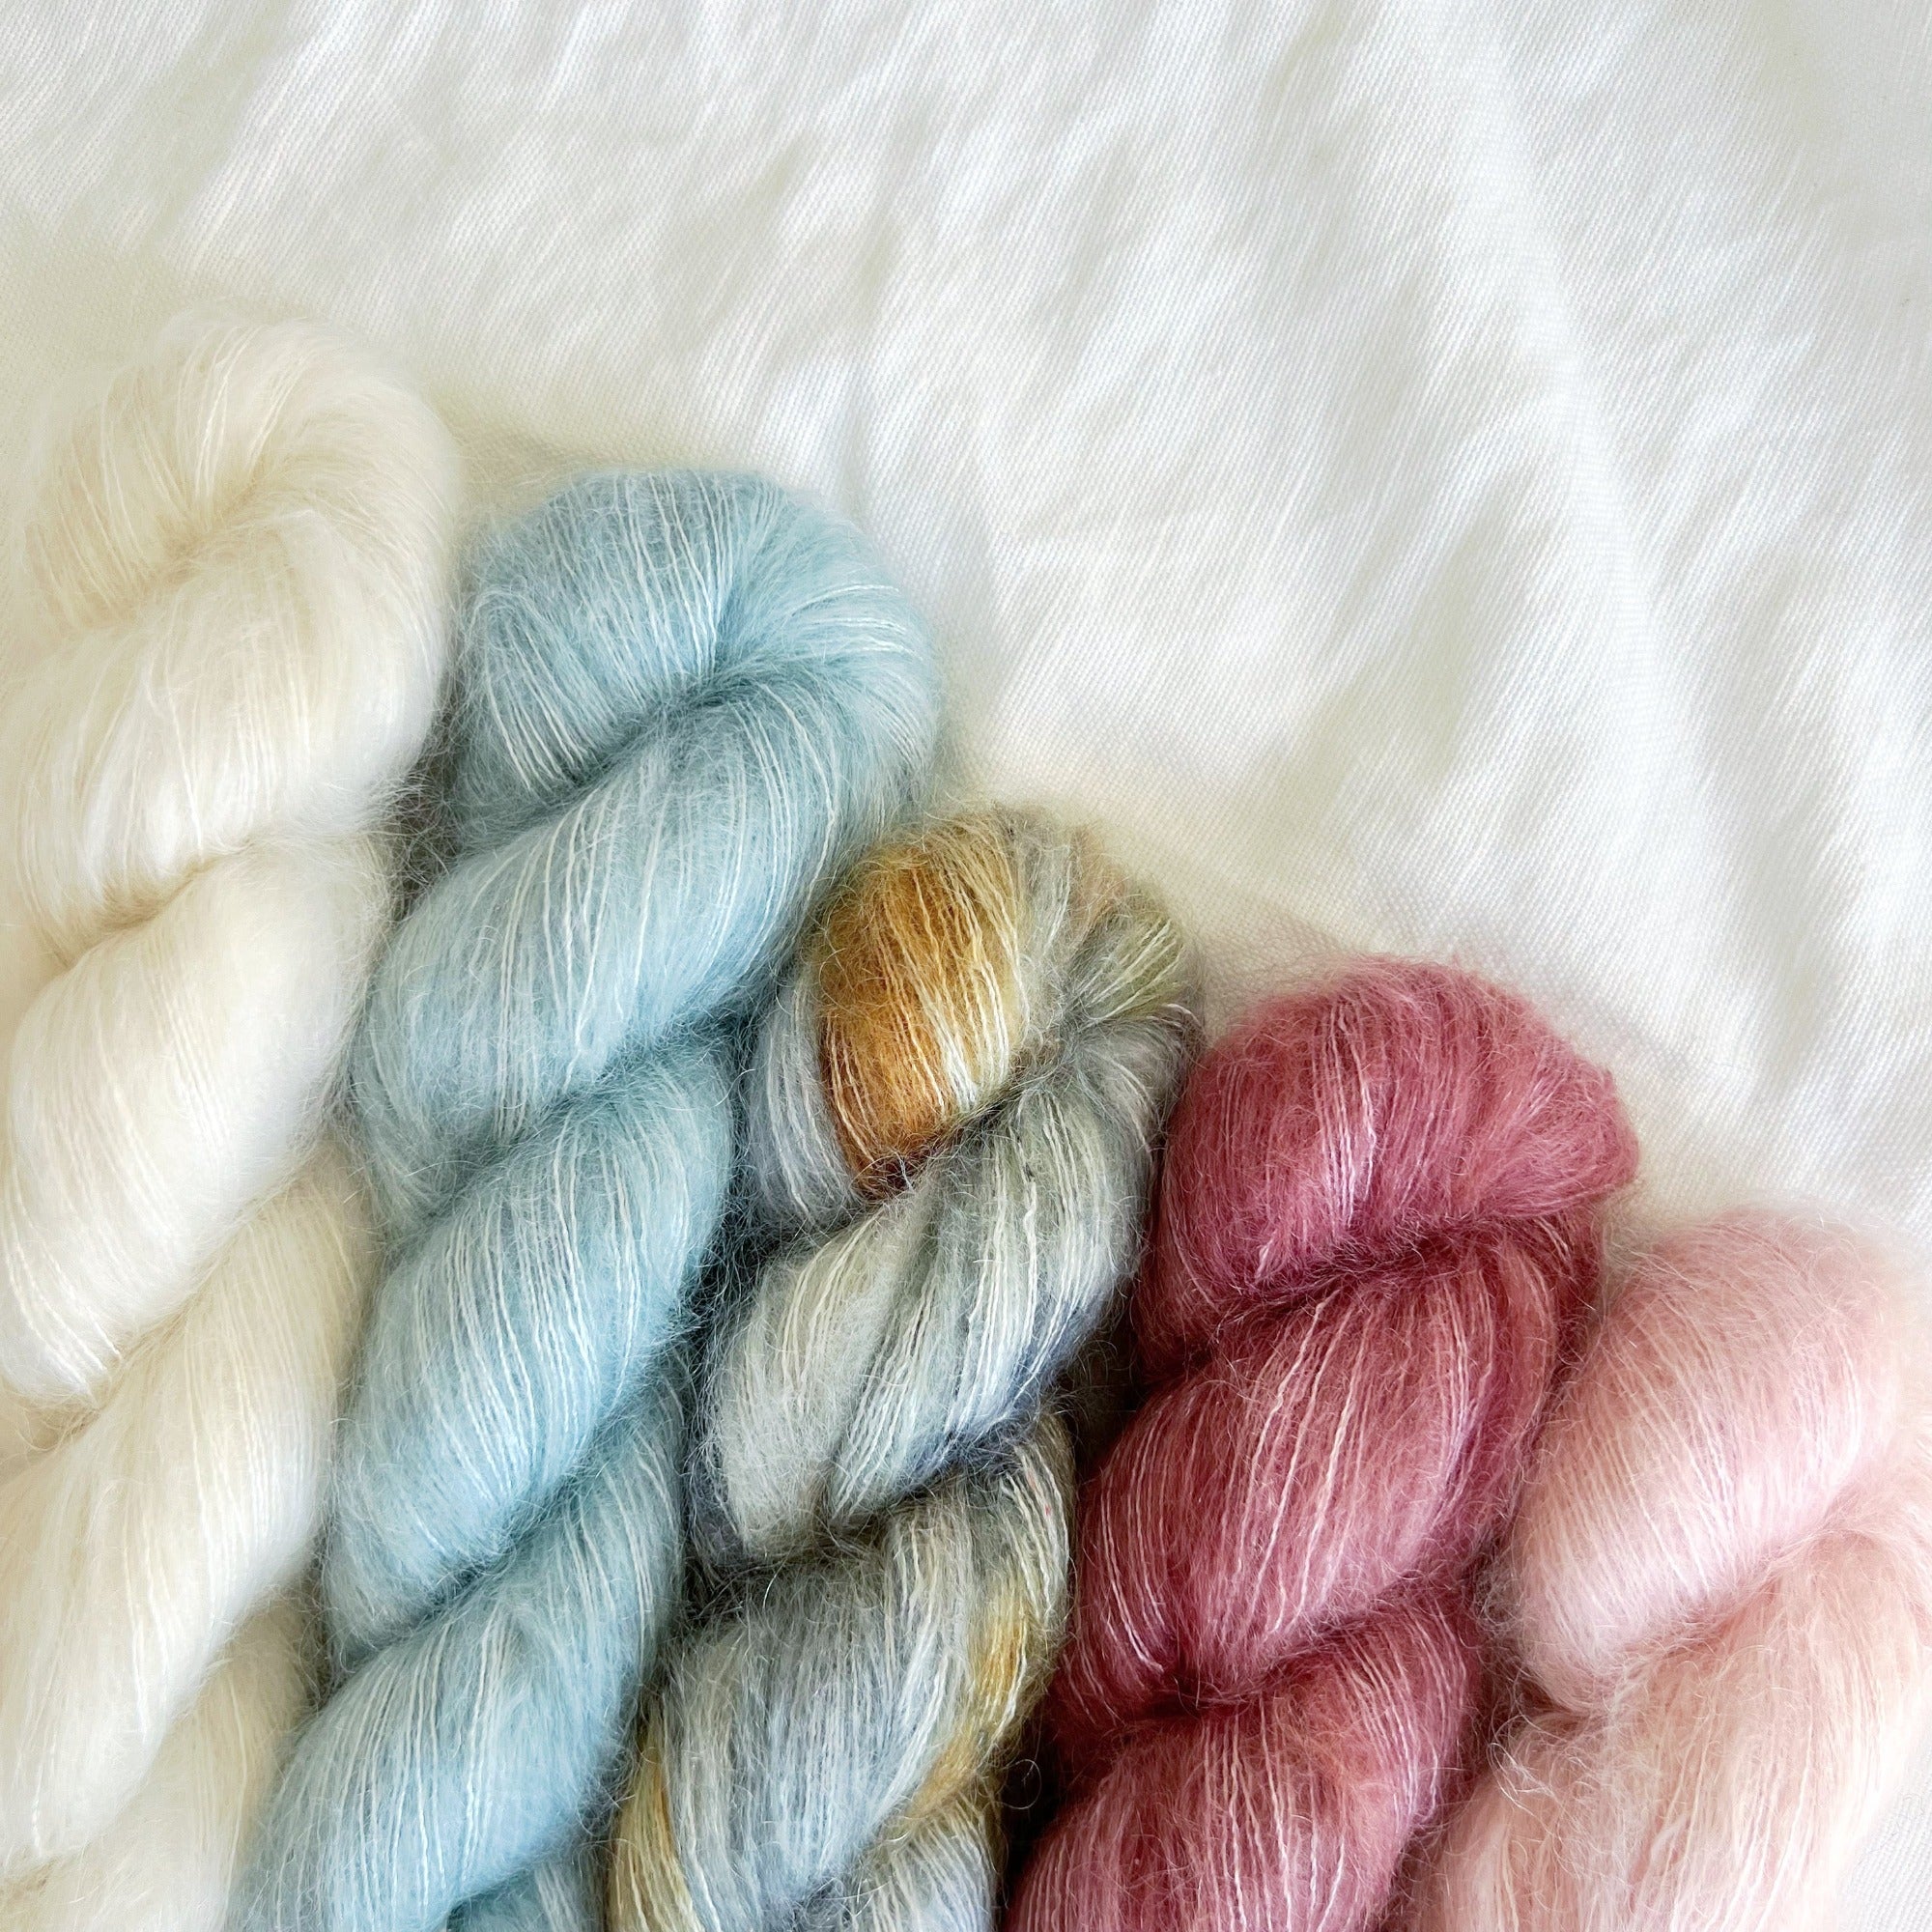 Shangdrok Hand-Dyed Mohair Silk